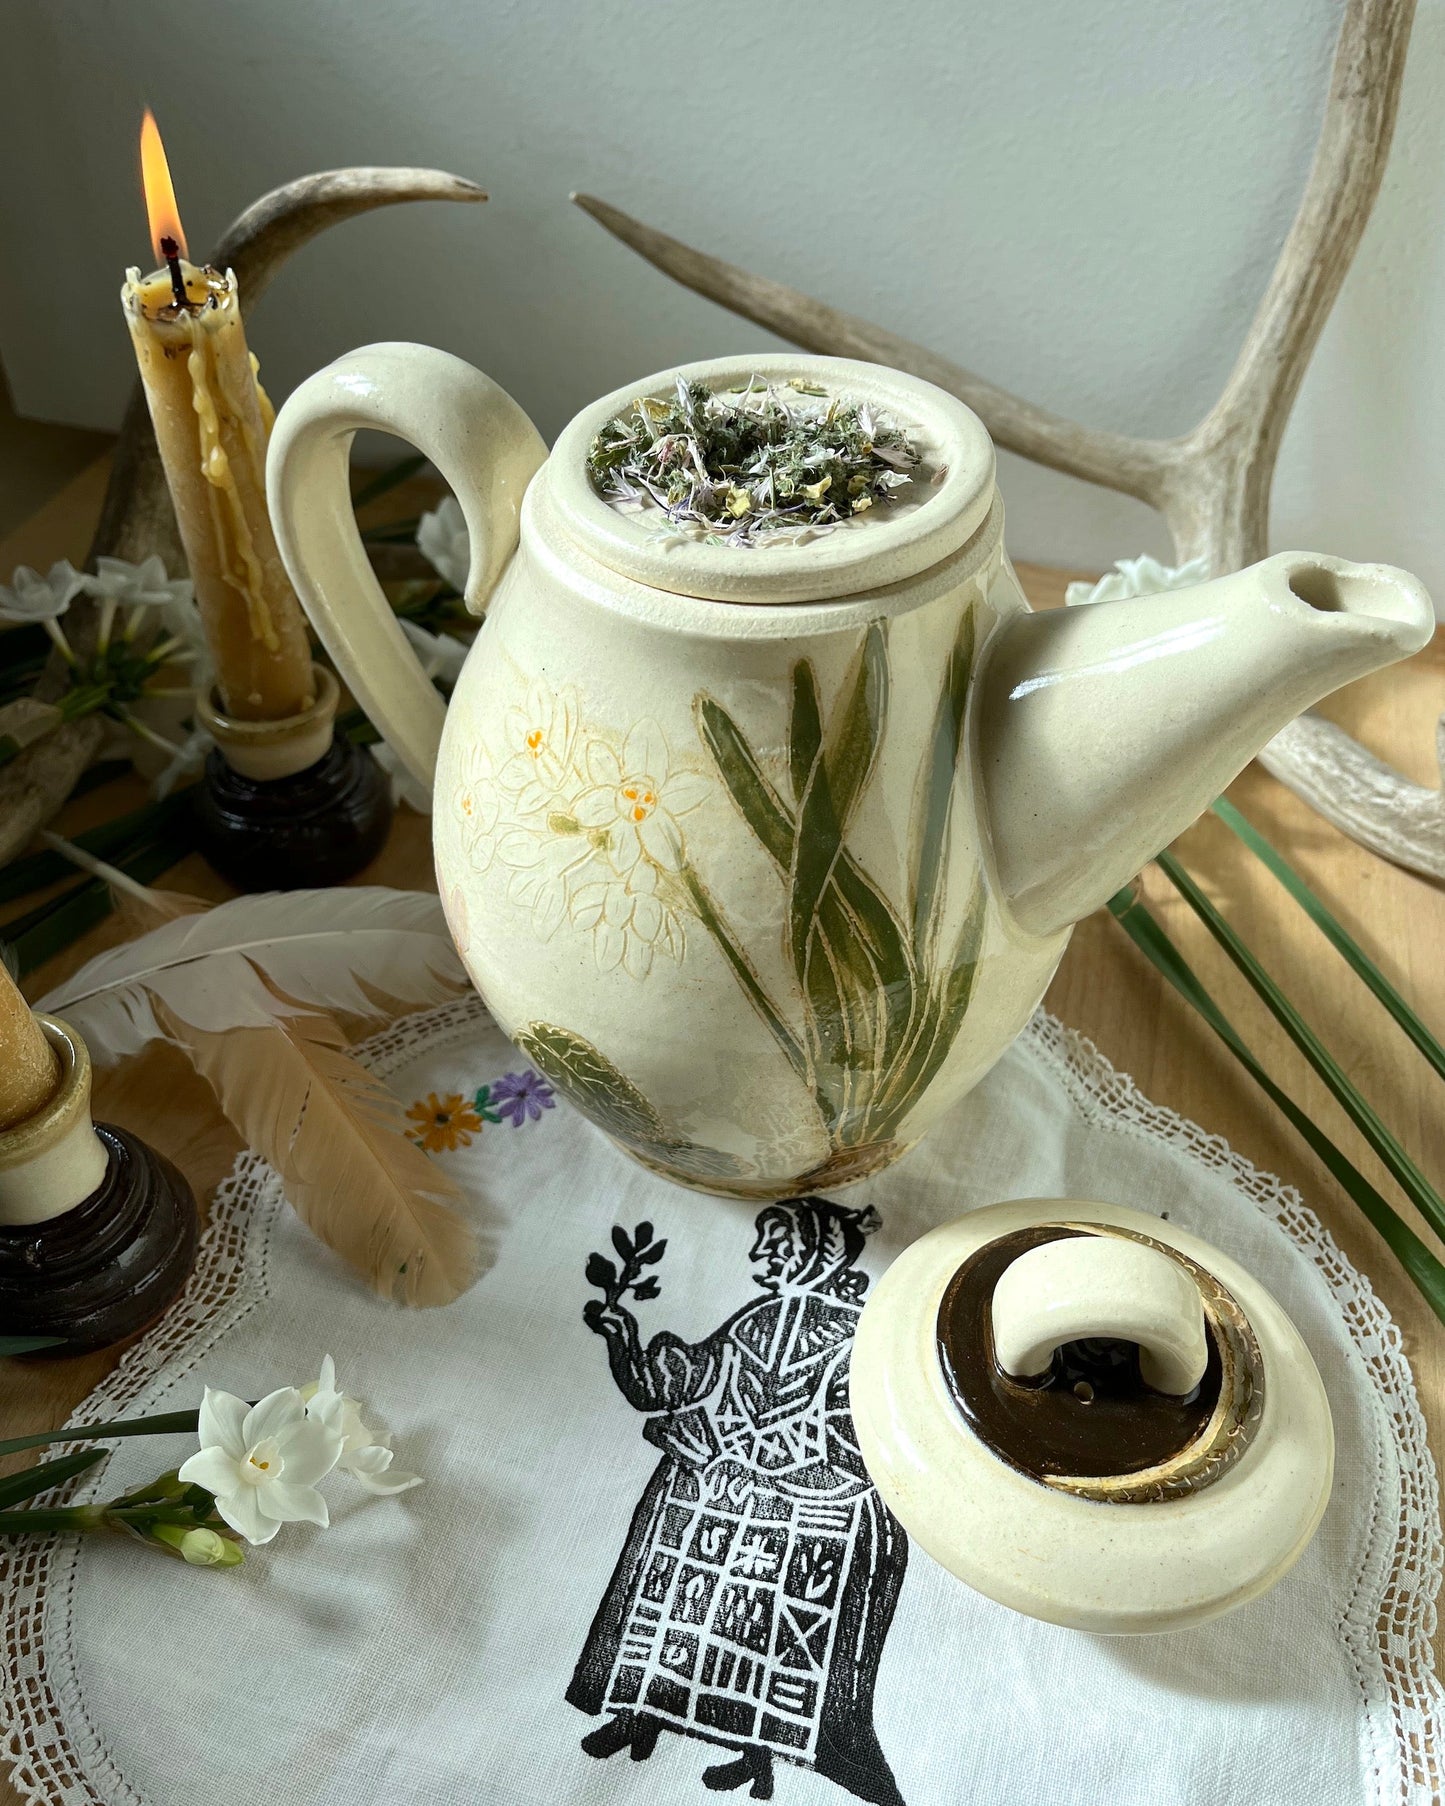 Flowers & Mushrooms Ceramic Teapot - 34 oz.